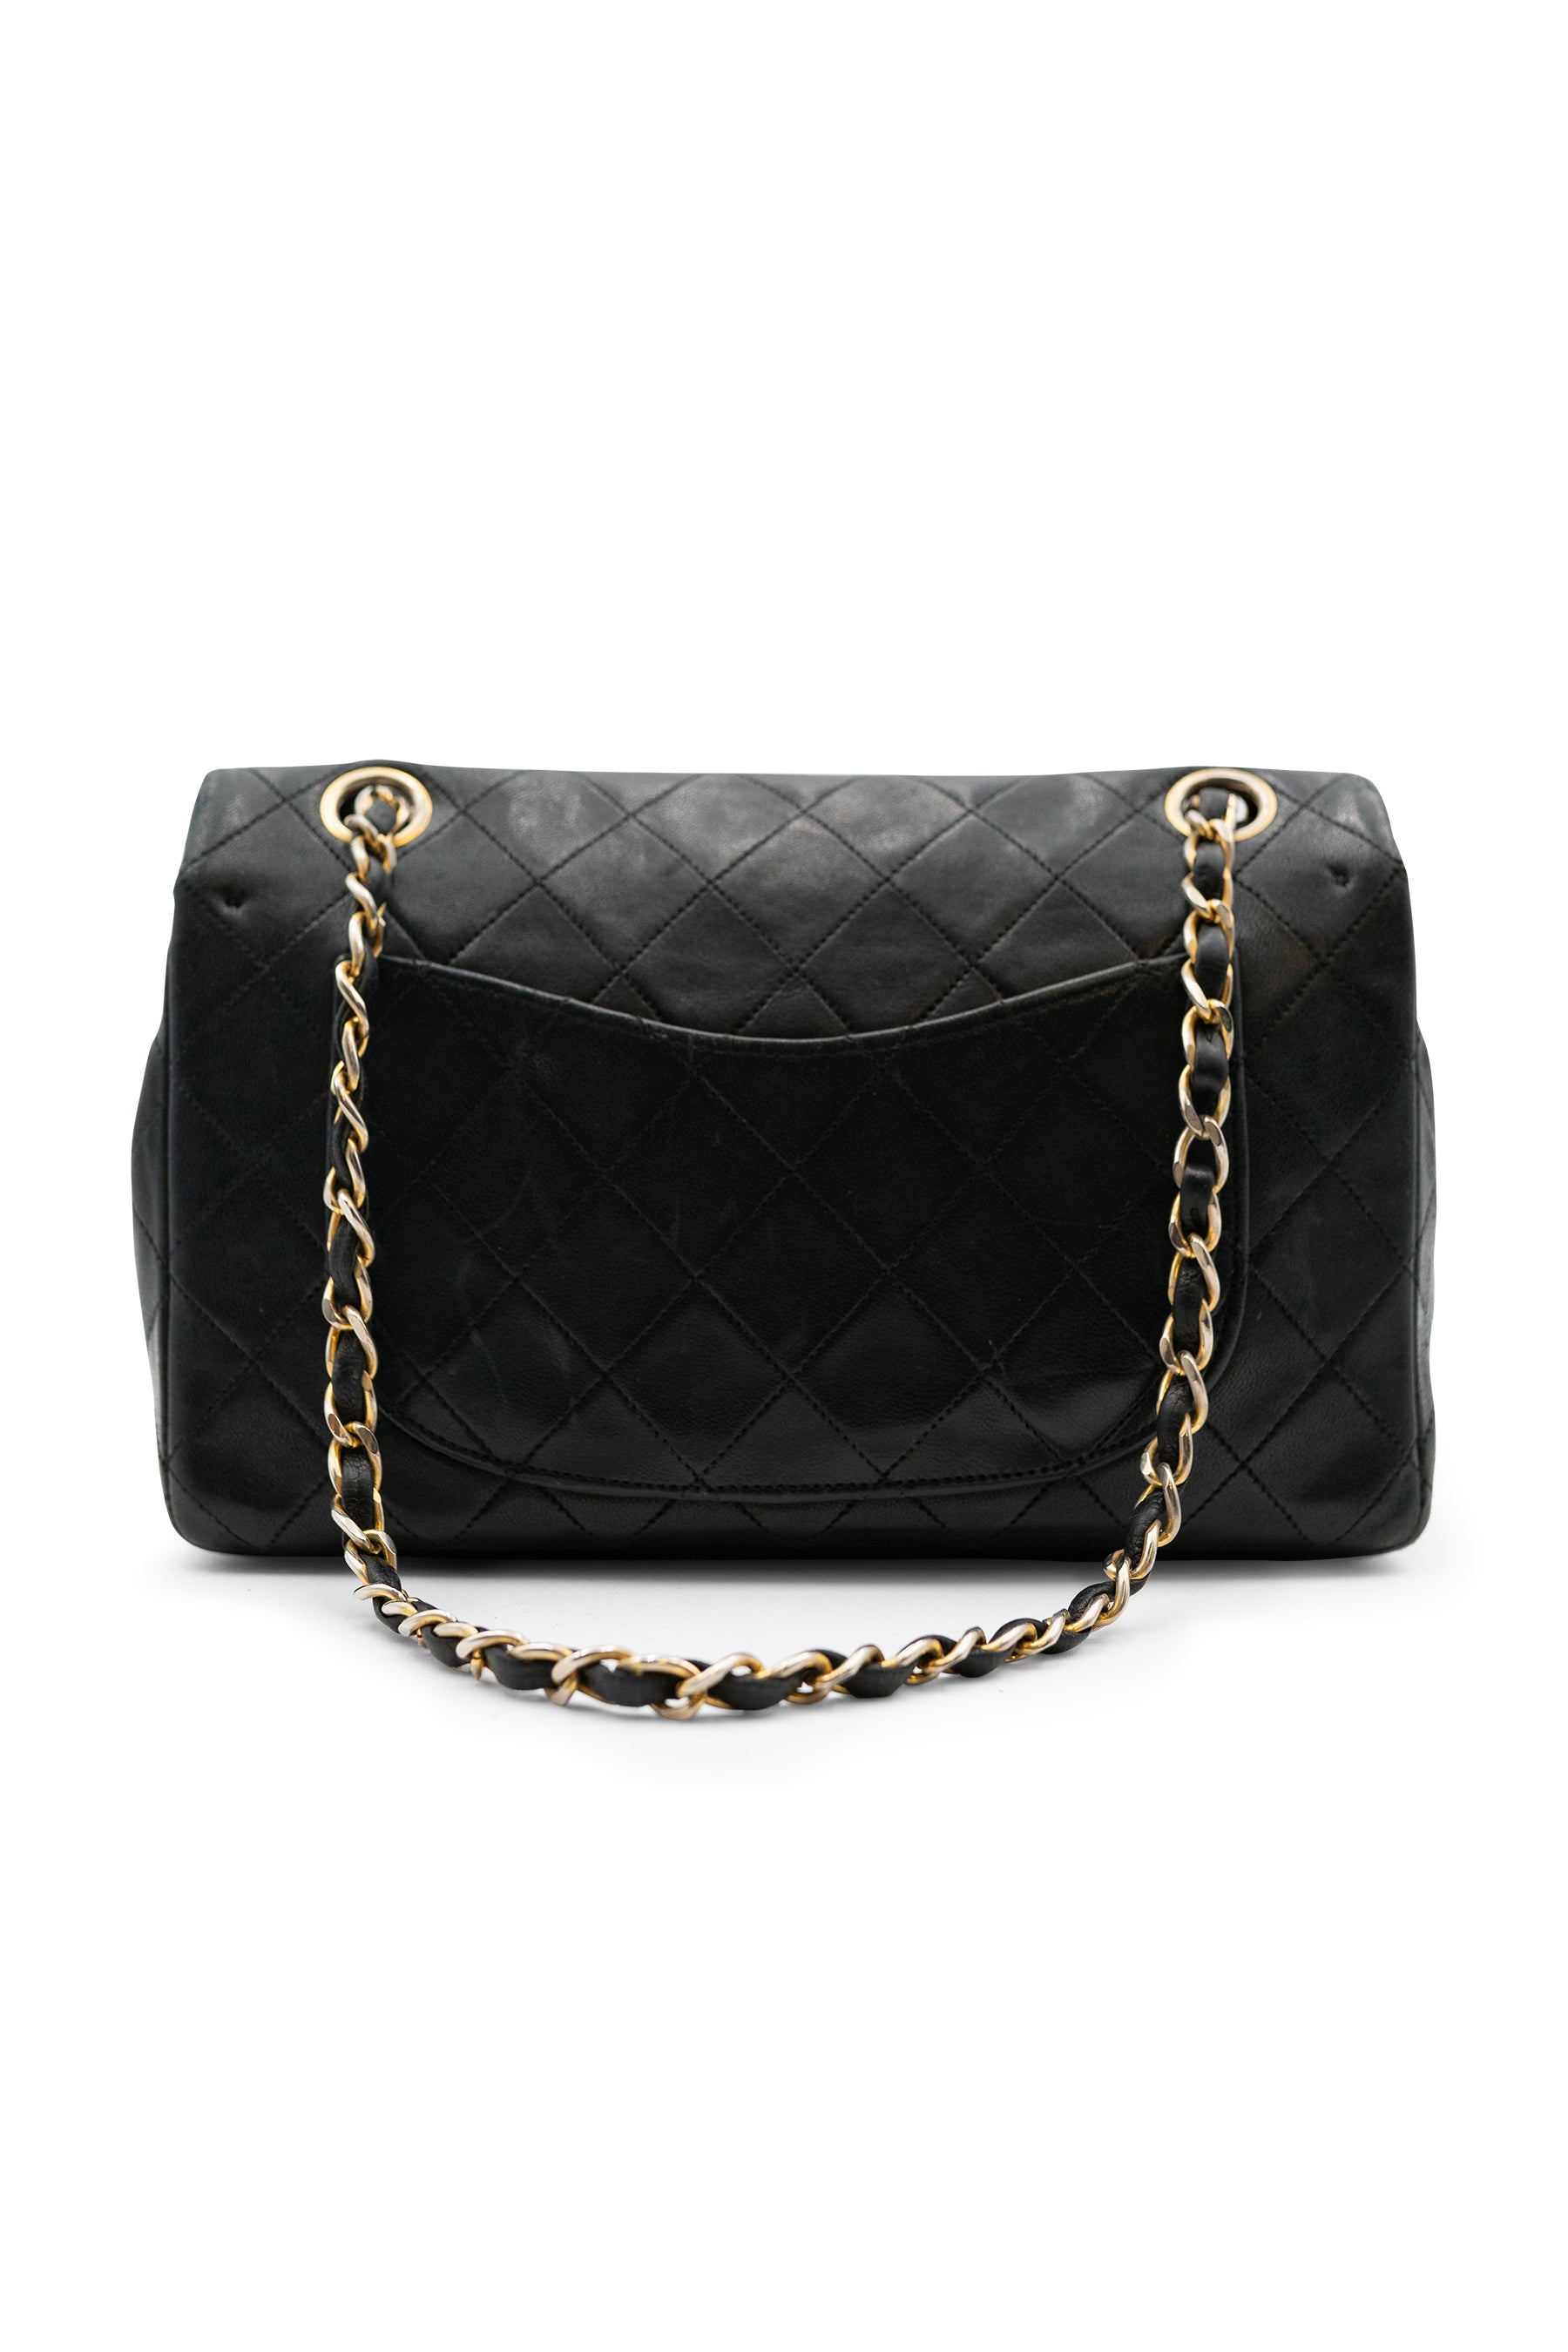 Chanel - Vintage Luxury Lambskin Medium Classic Double Flap Shoulder Bag -  Free Shipping